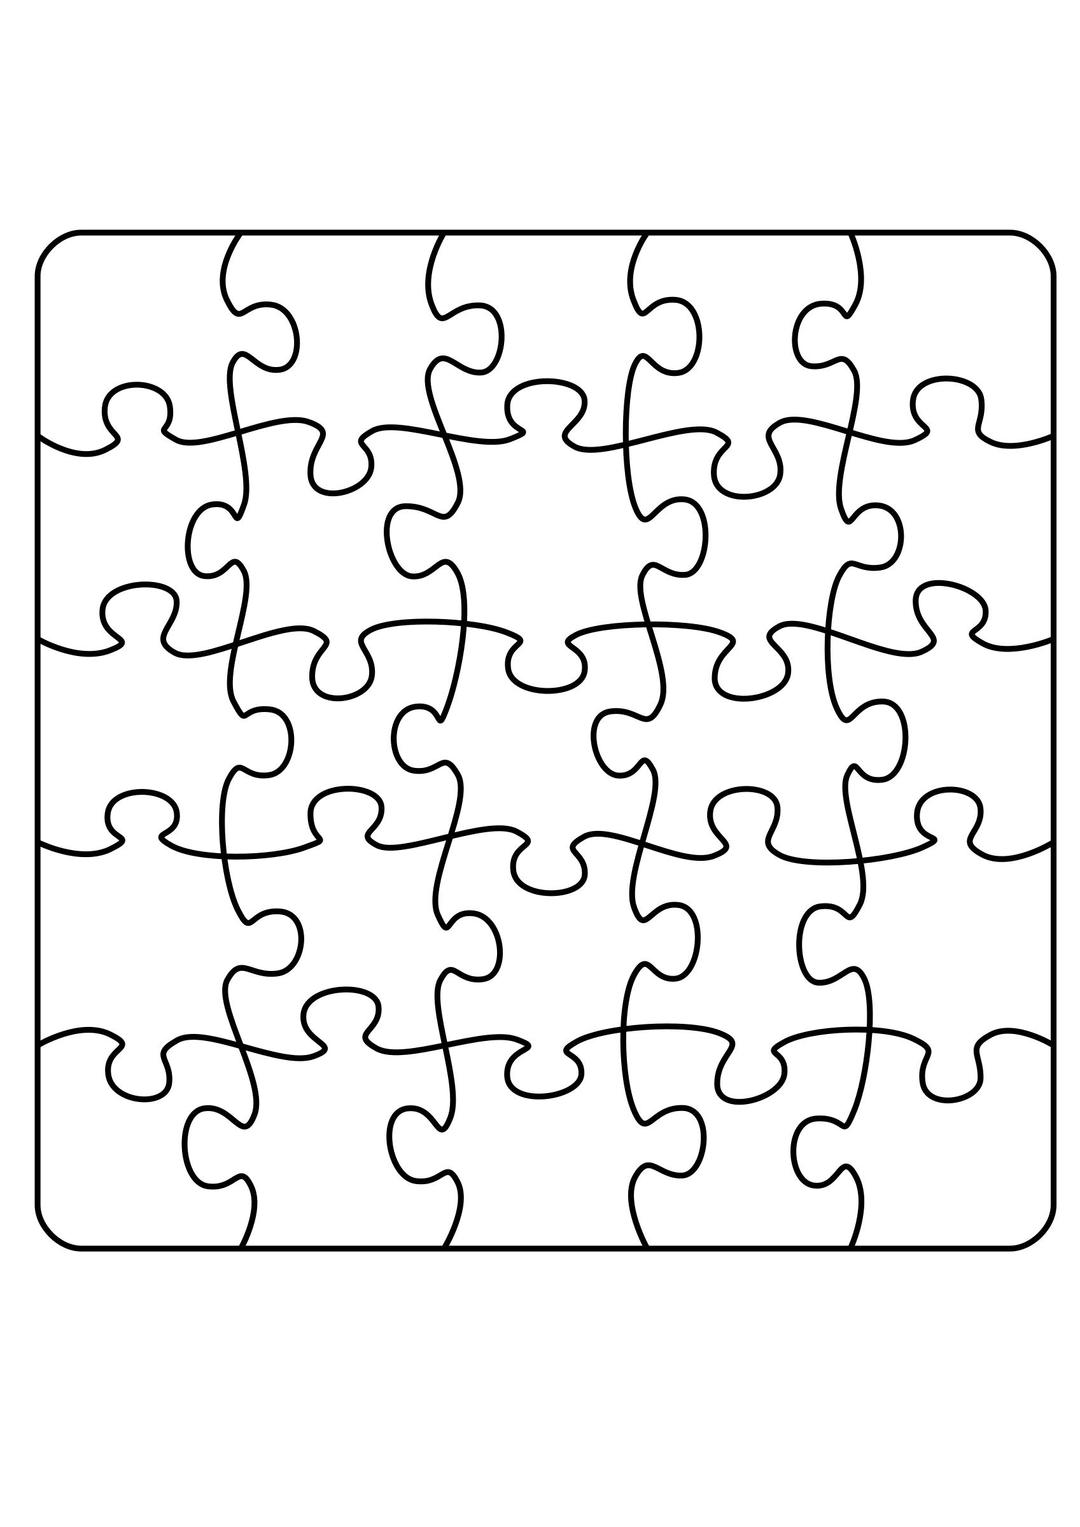 Jigsaw Puzzle A4 5 x 5  png transparent